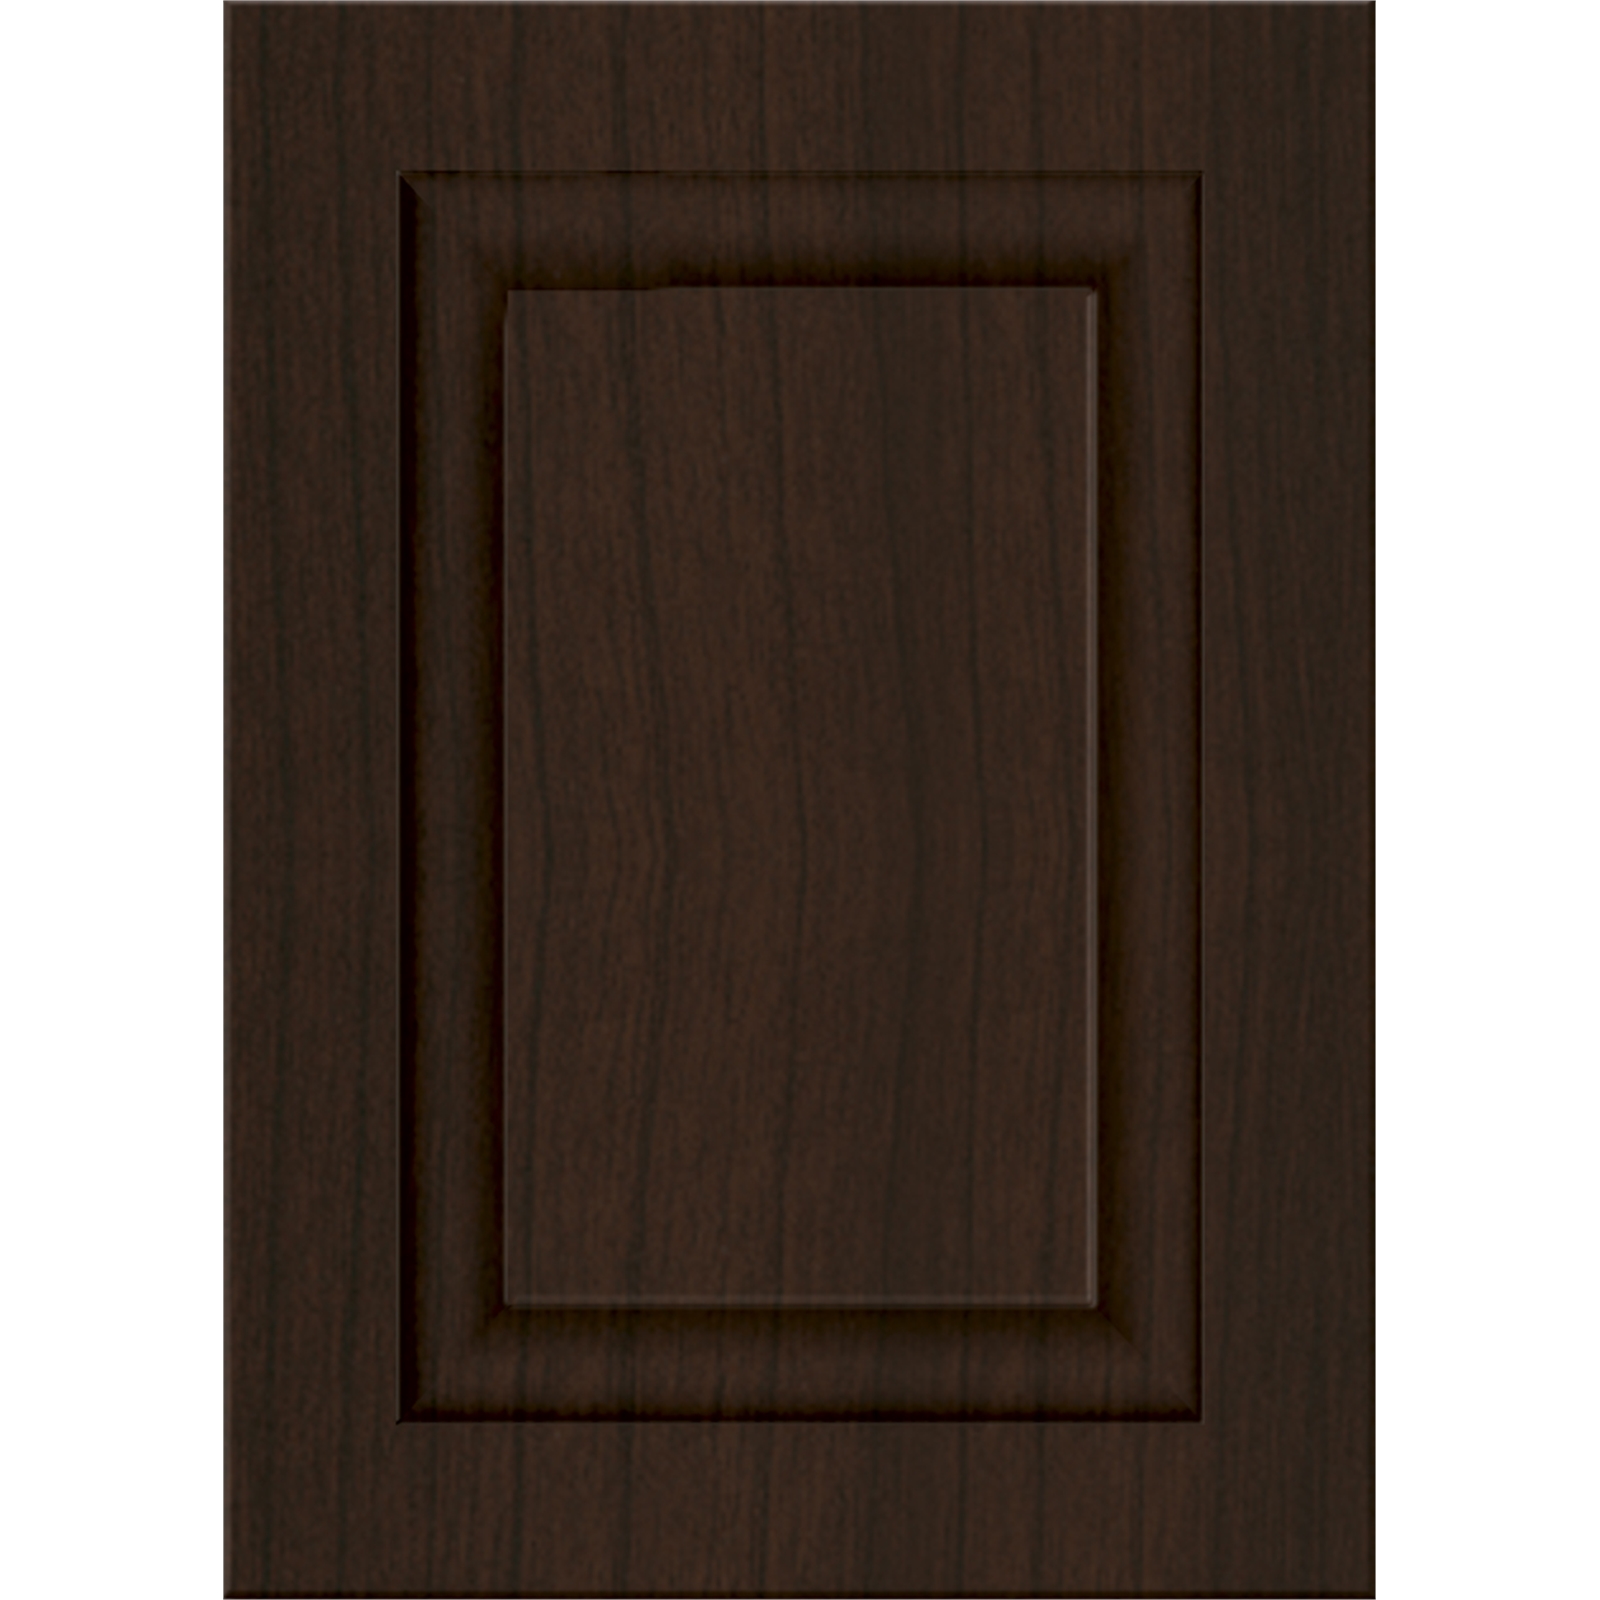 Kaboodle 600mm Chocolate Wood Heritage Slimline Door